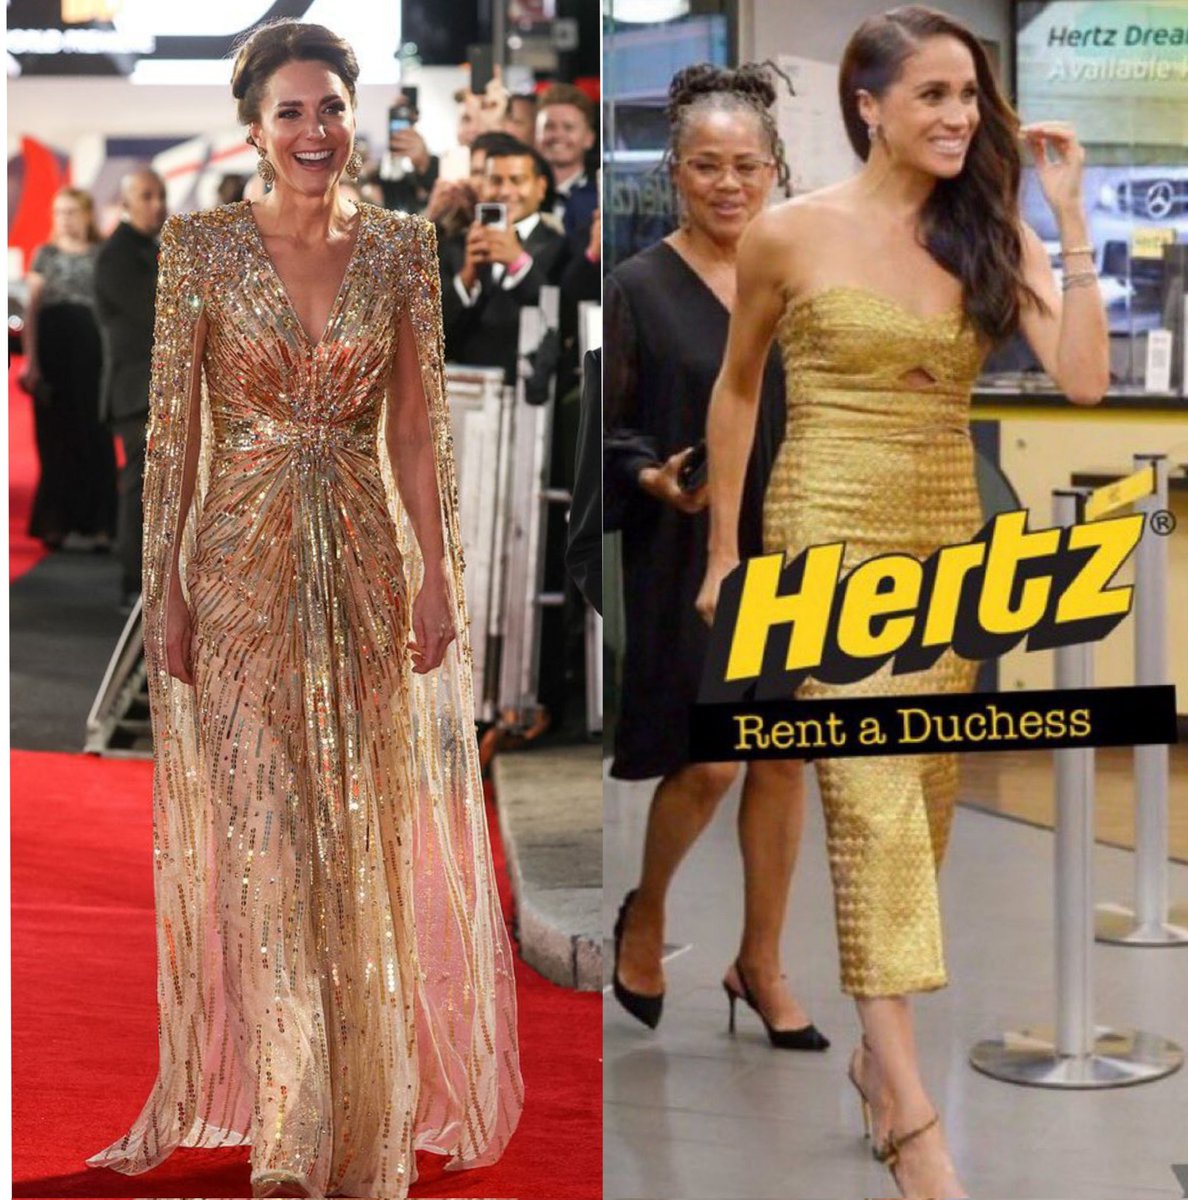 Red carpet vs Hertz Car rental. 😅

#HertzDress 

HRH The Princess of Wales

#KateMiddleton #KateMiddletonStyle #KateEffect #PrincessCatherine